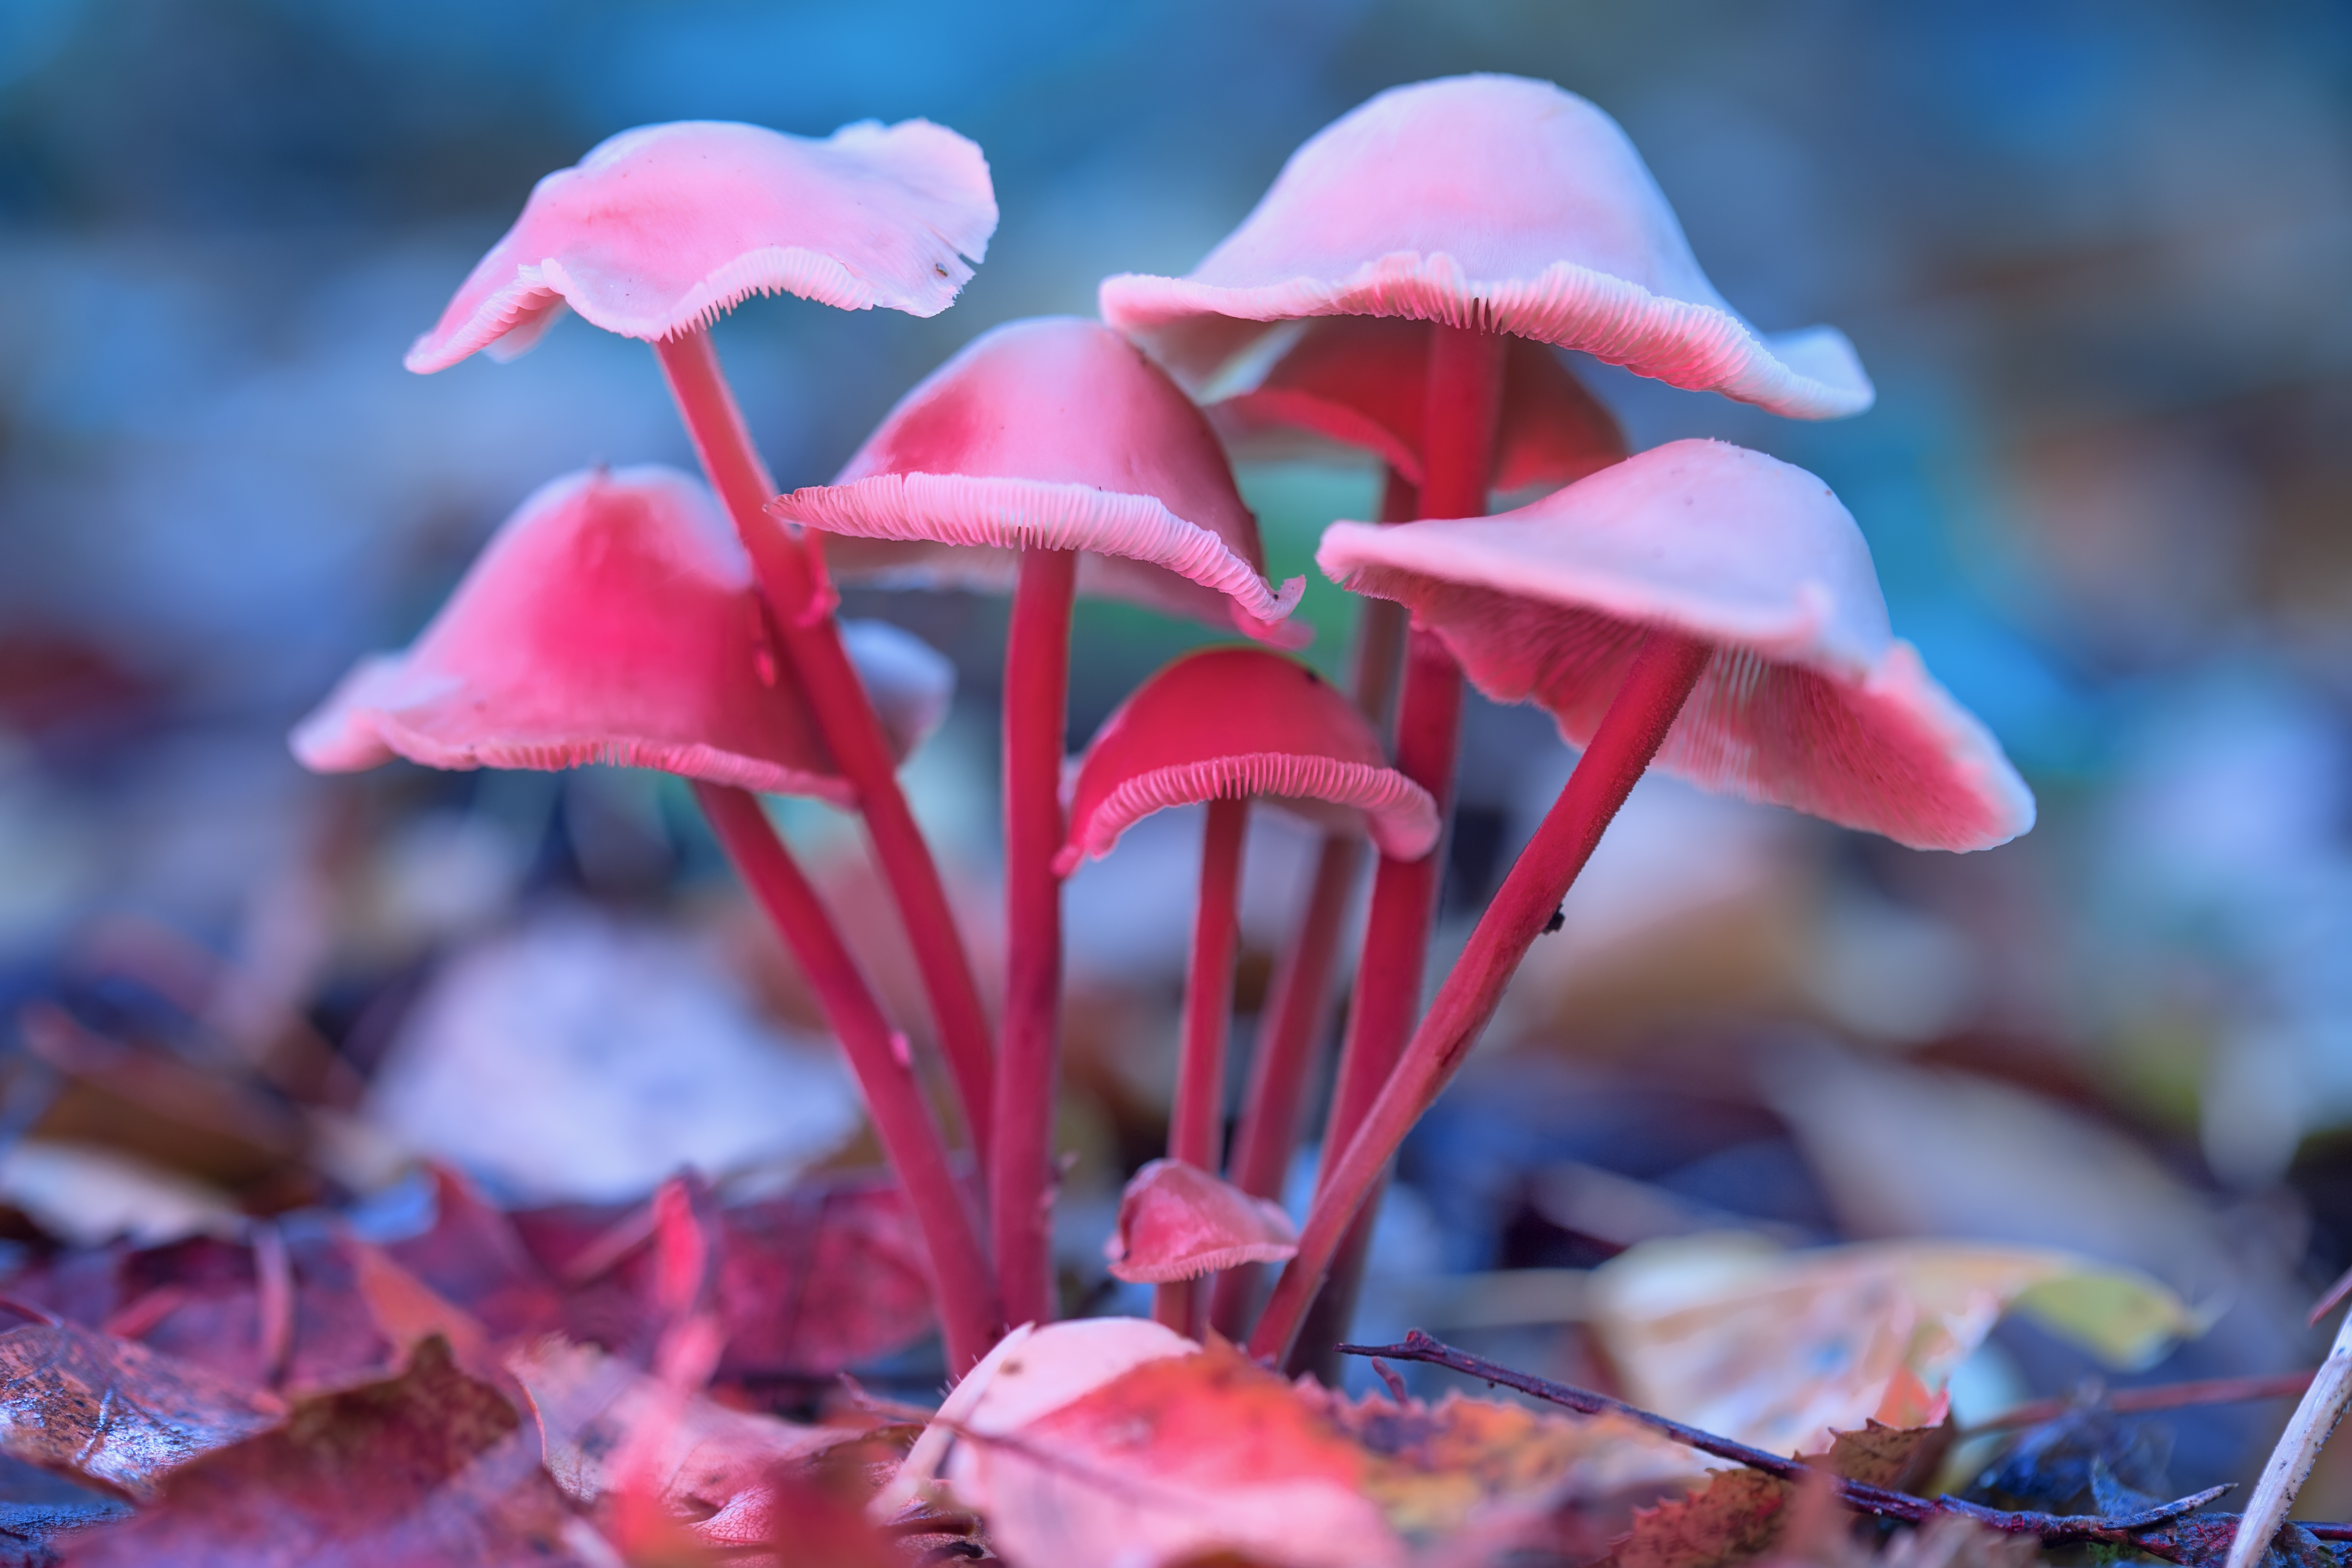 Des champignons contenant de la psilocybine.&nbsp;© Sergei, Adobe Stock&nbsp;